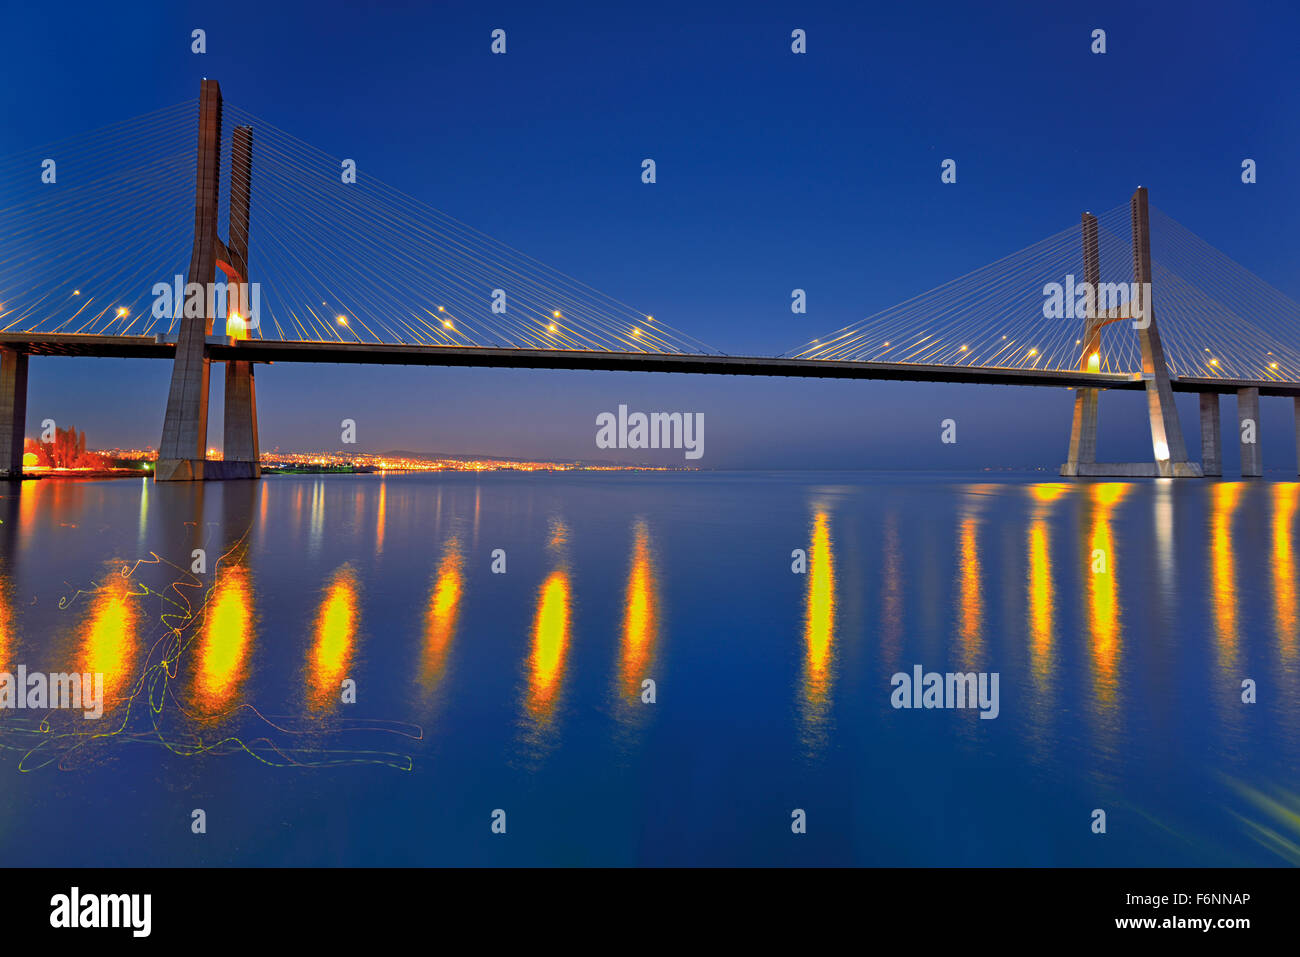 Portugal: Nocturnal view of Vasco da Gama bridge over river Tagus Stock Photo